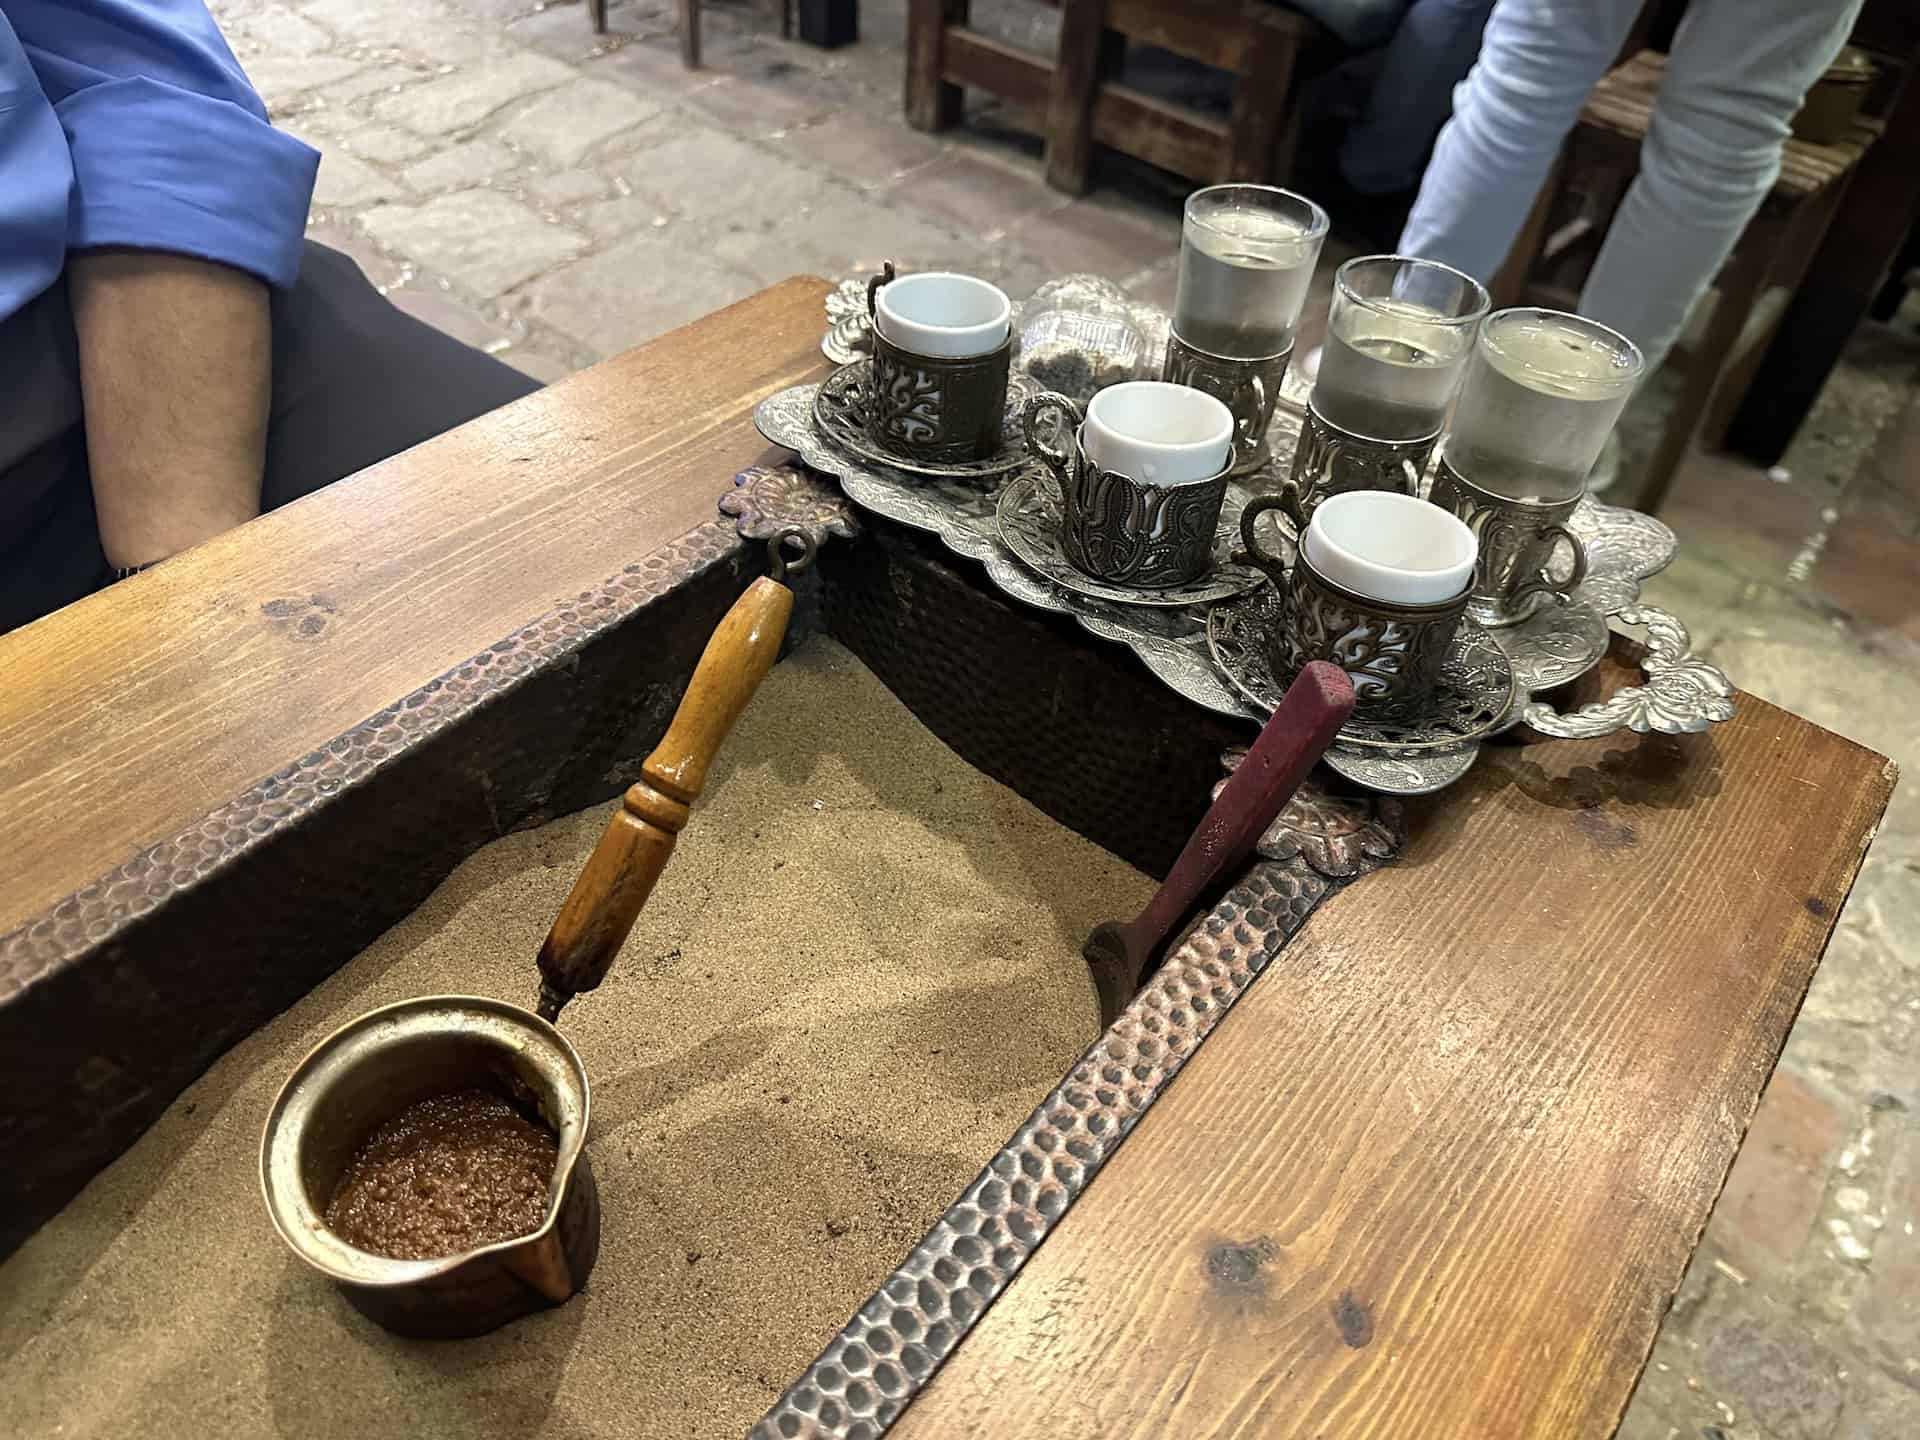 Turkish coffee cooked in hot sand at Fındık Café in Şirince, Turkey